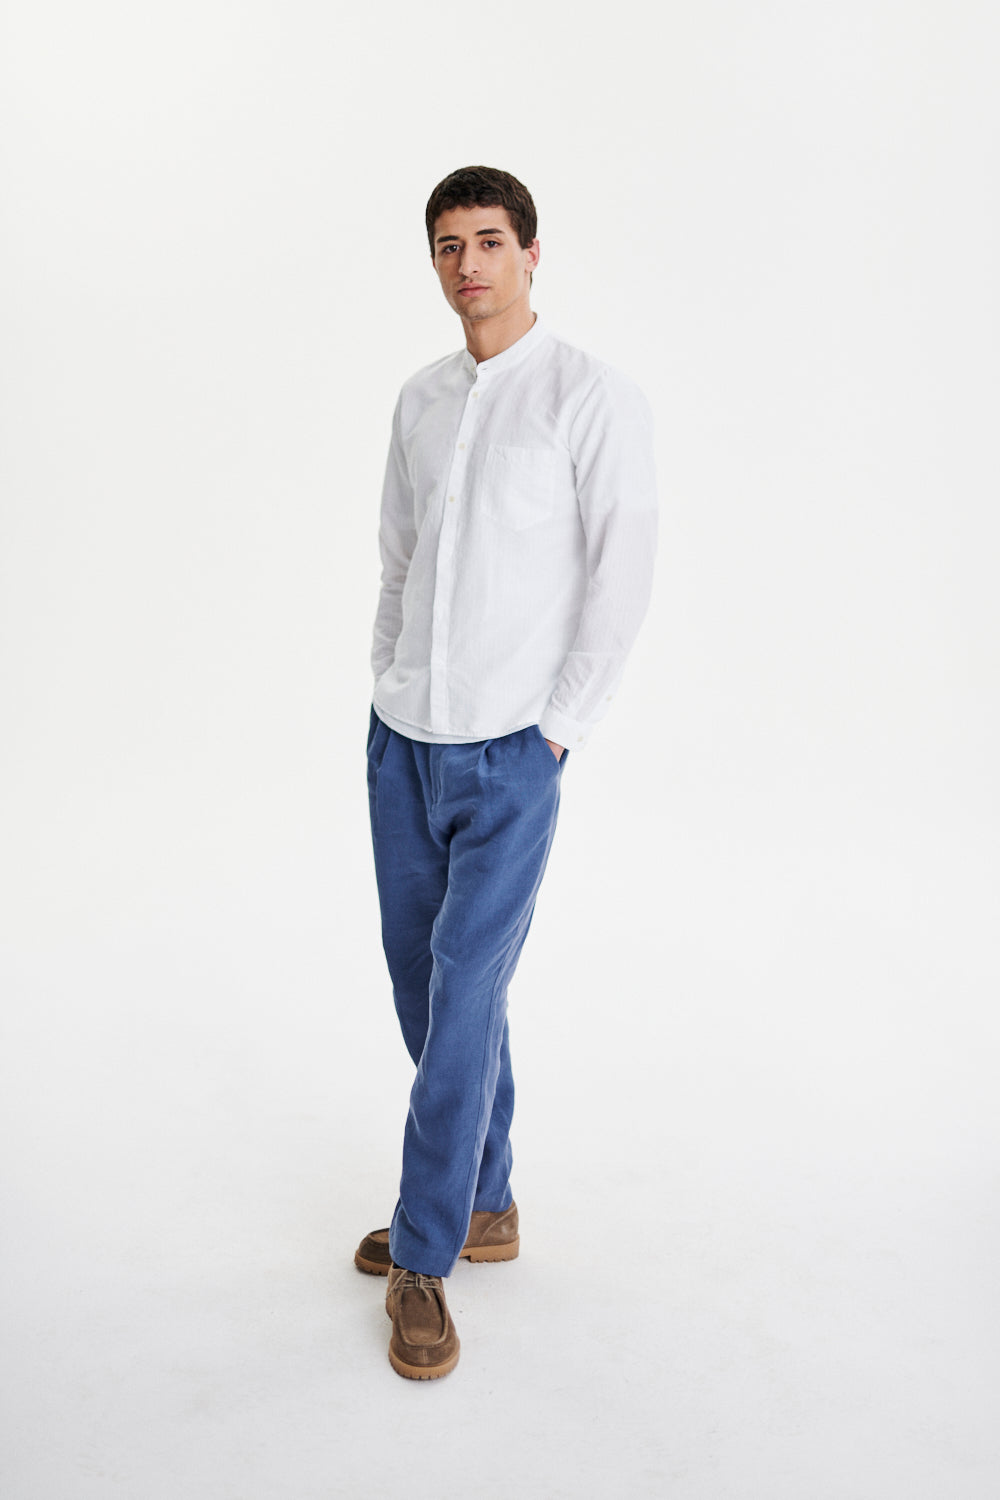 Zen Shirt in a White Portuguese Cotton and Linen Seersucker